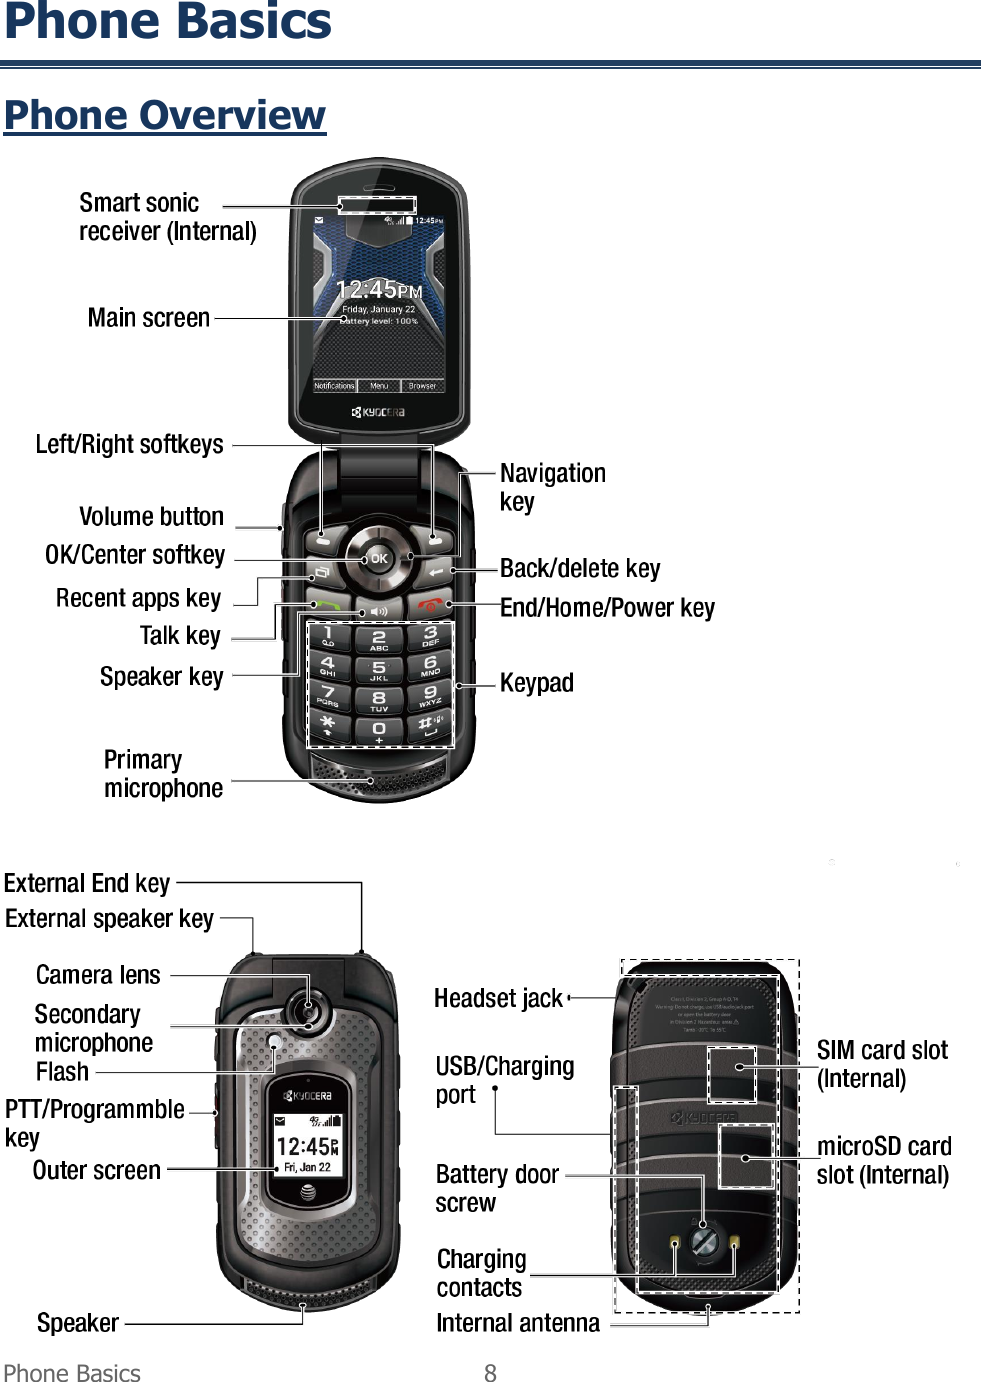  Phone Basics  8   Phone Basics Phone Overview  